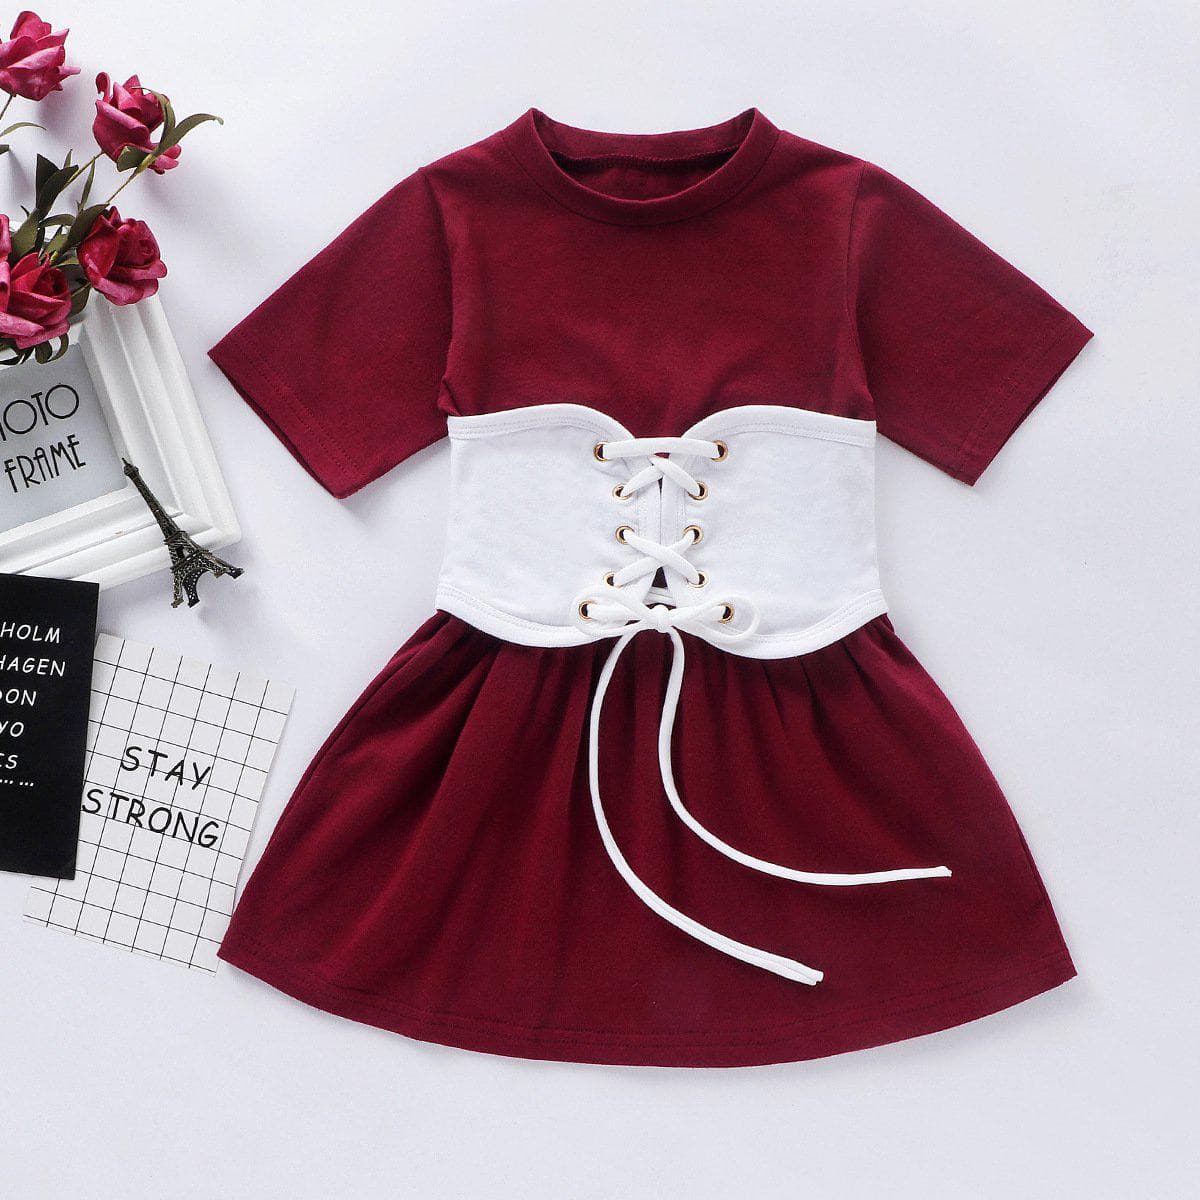 Rylee + Cru - Baby Girls - Dresses